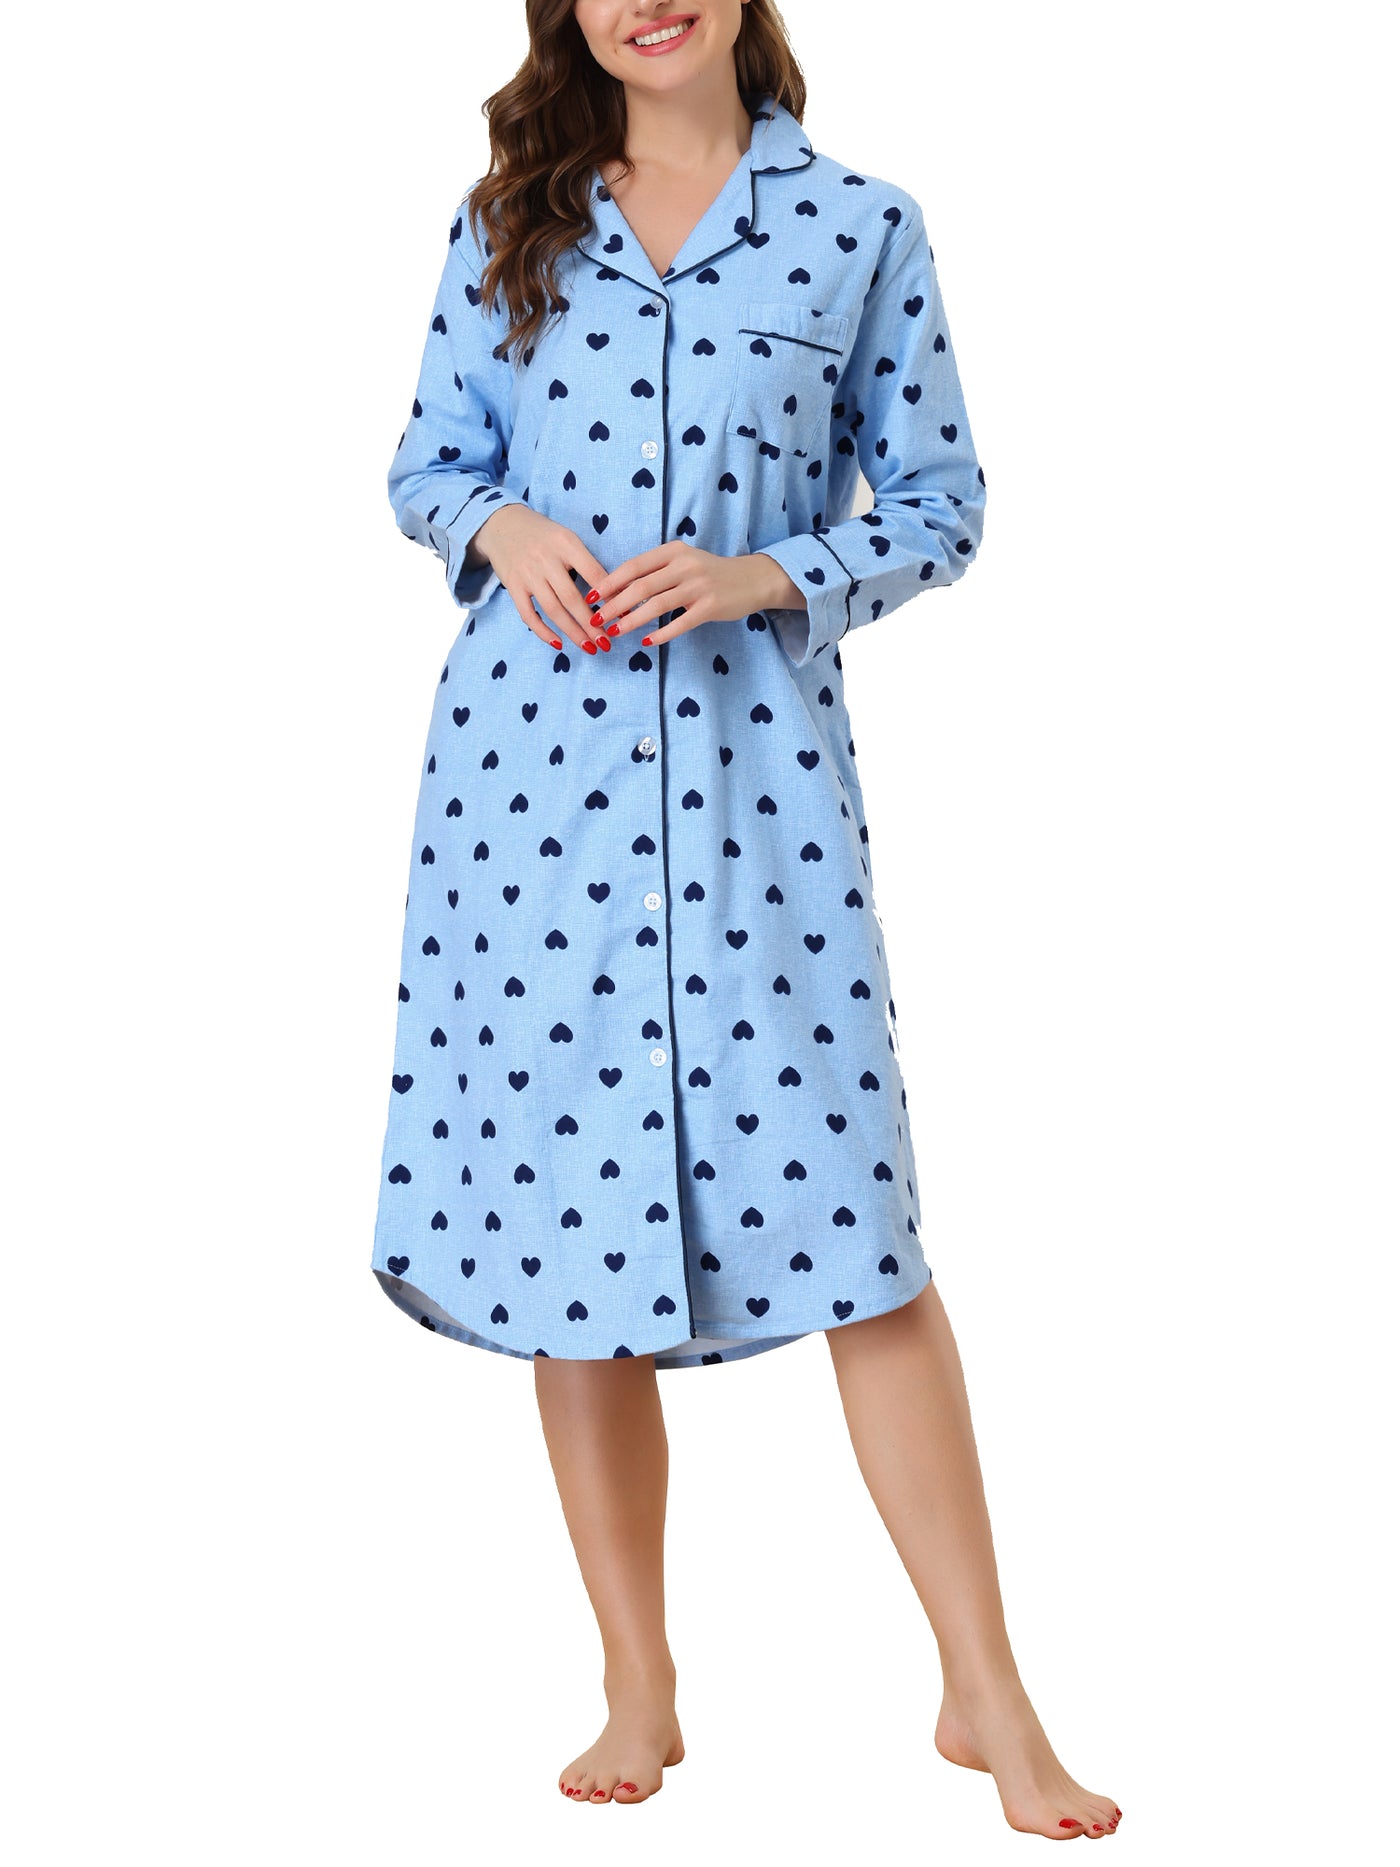 Bublédon Womens Plaid Heart Printed Shirtdress Sleepshirt Loungewear Pajama Shirt Dress